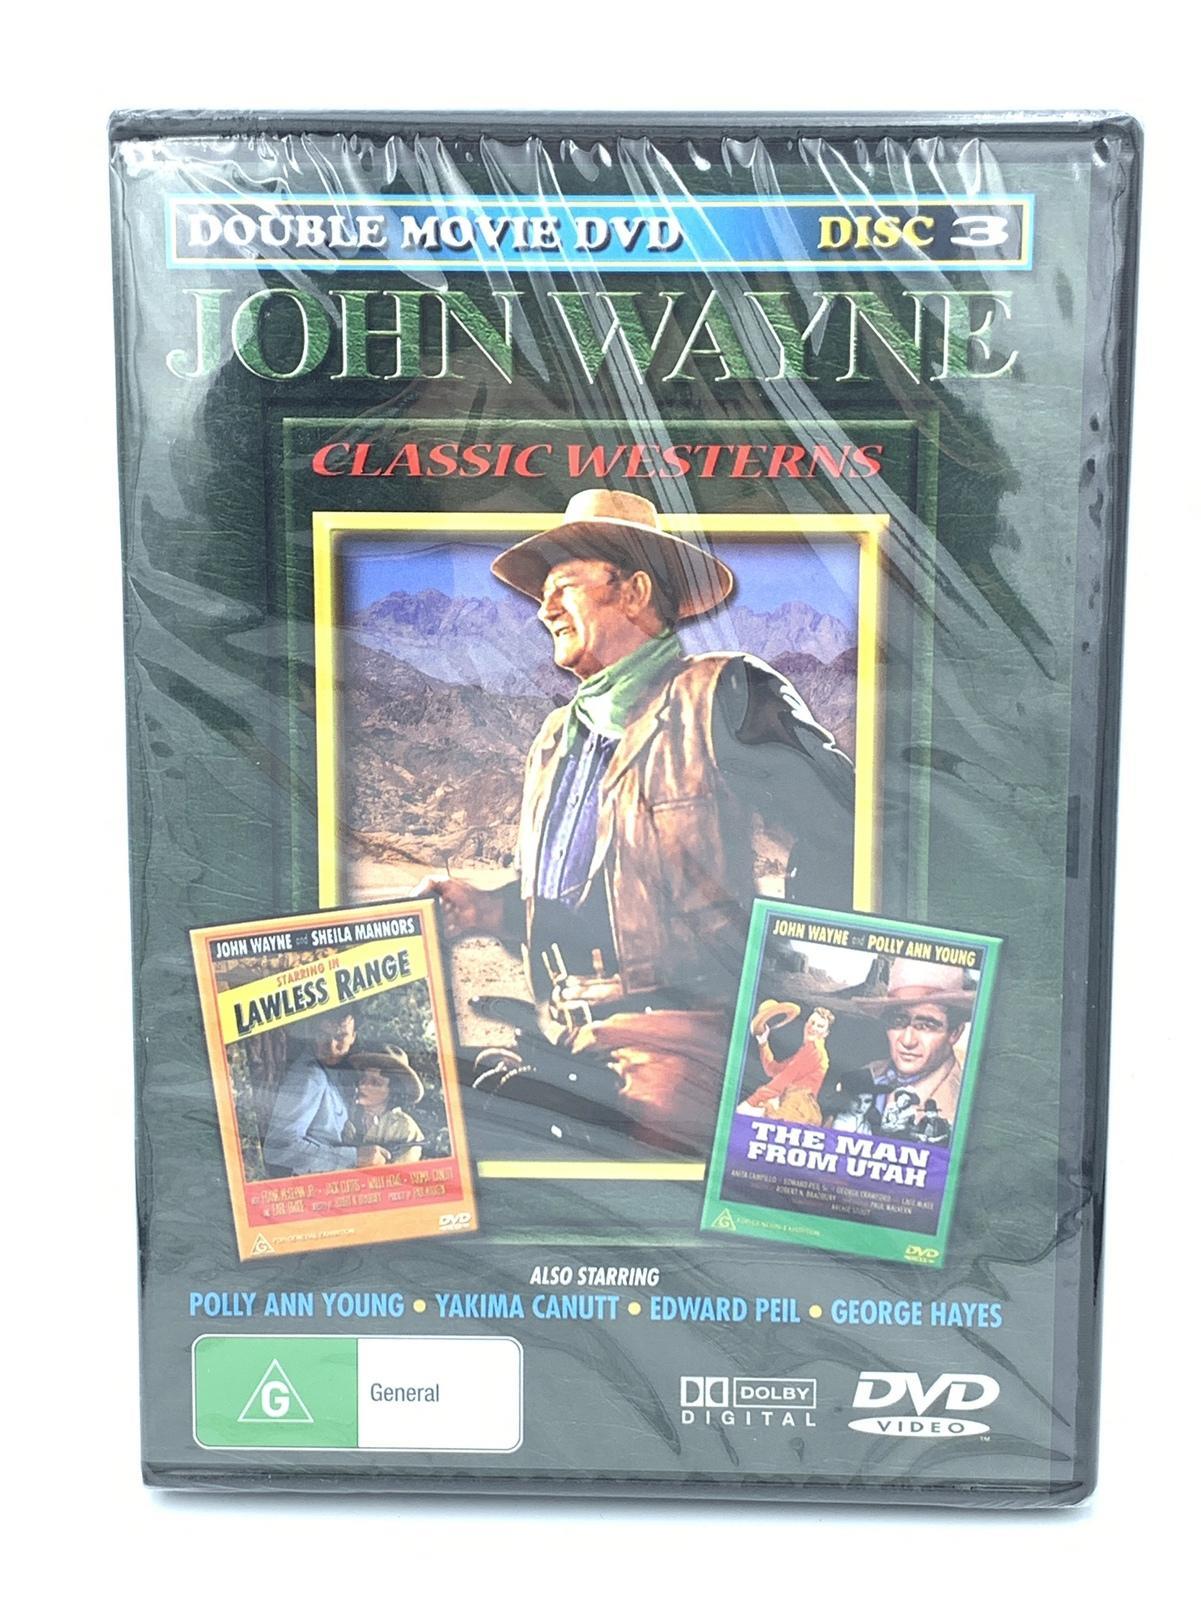 John Wayne double movie lawless range man from utah classic - DVD New Region ALL